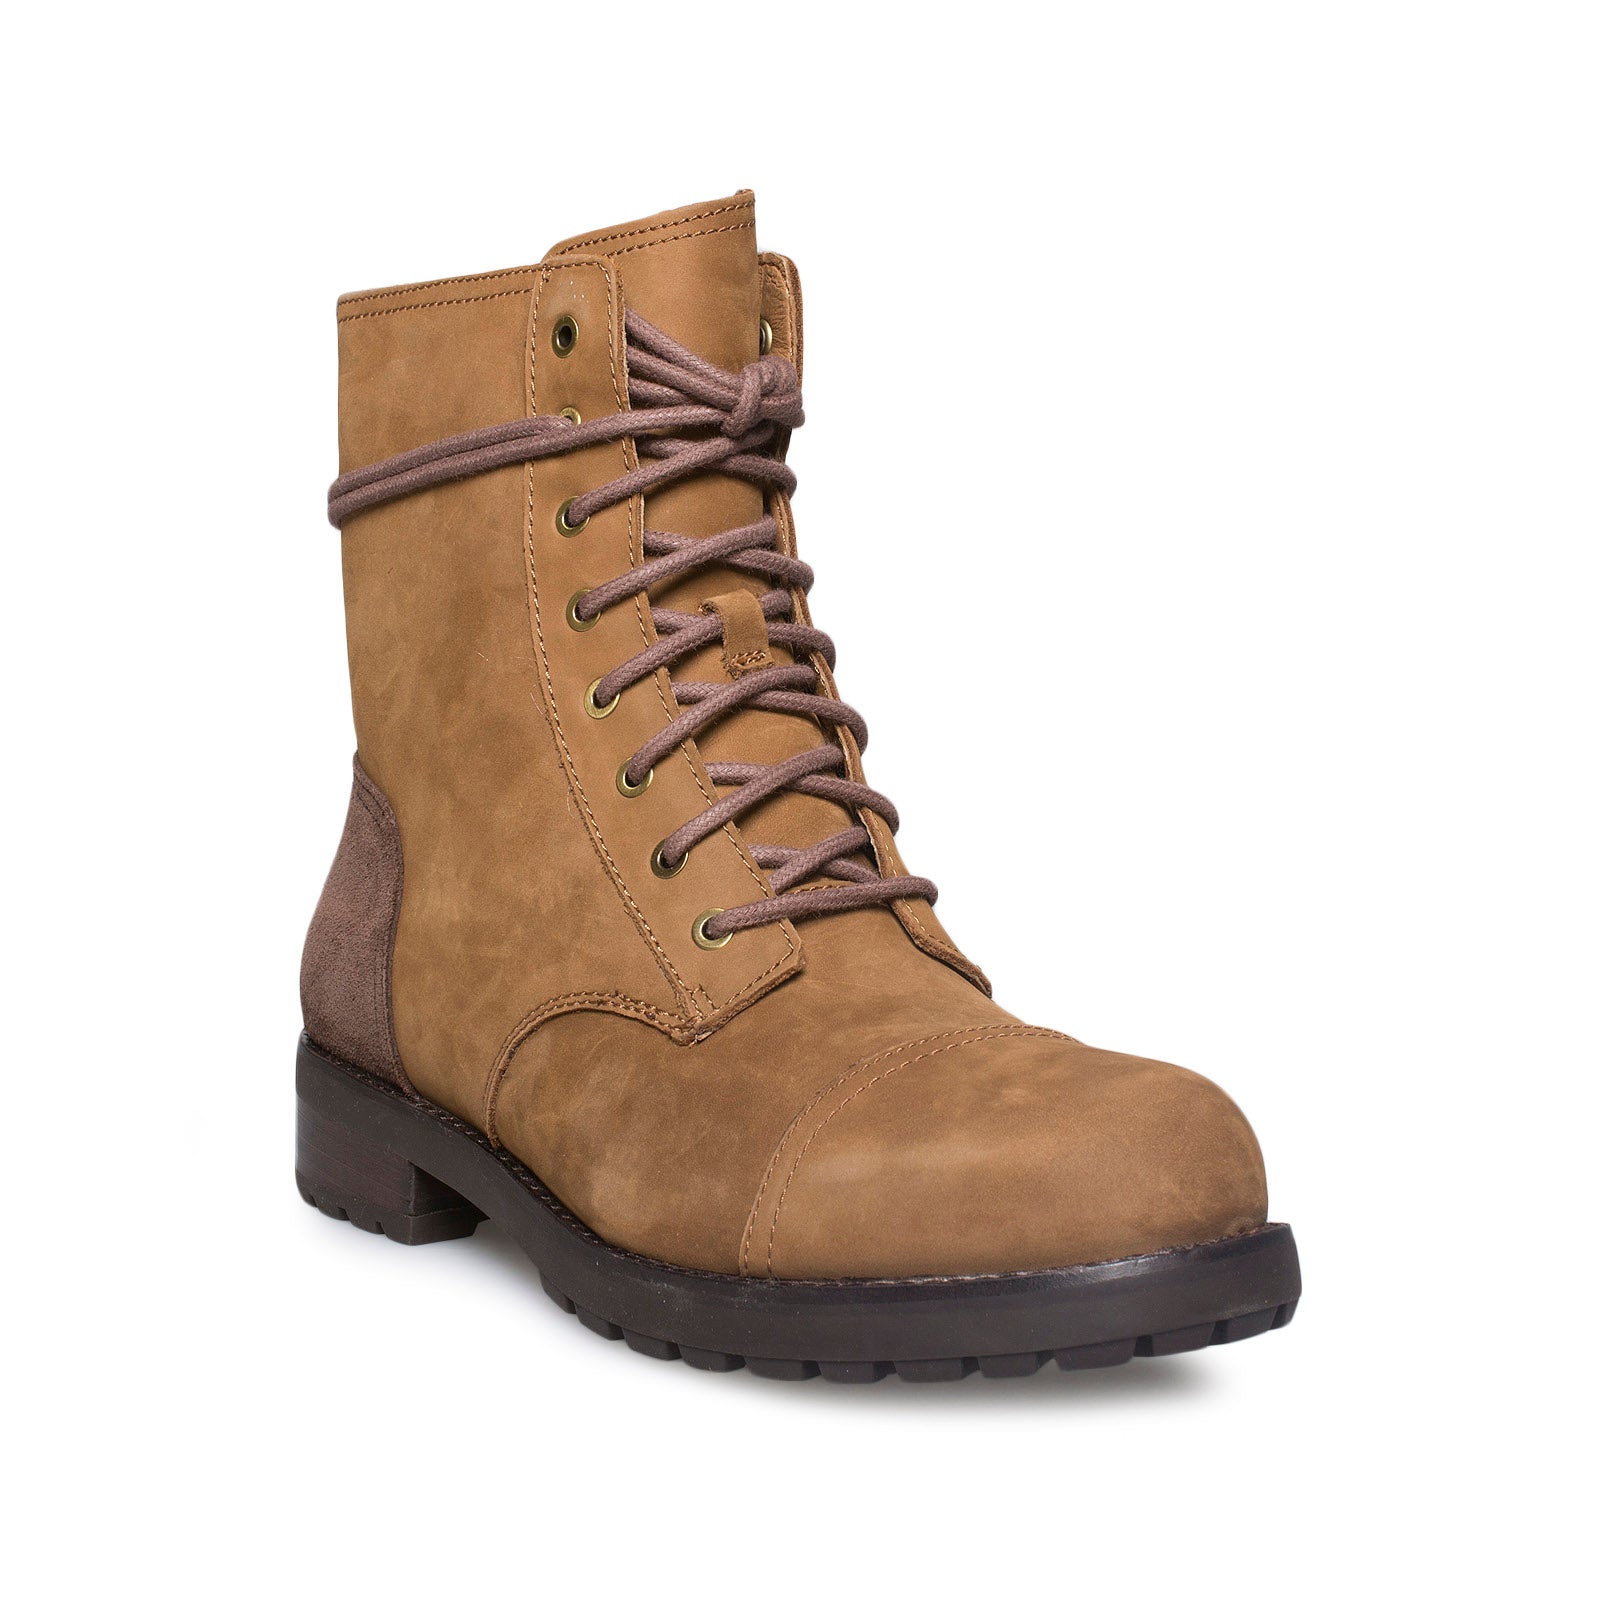 UGG Kilmer Chestnut Boots - Woman's 